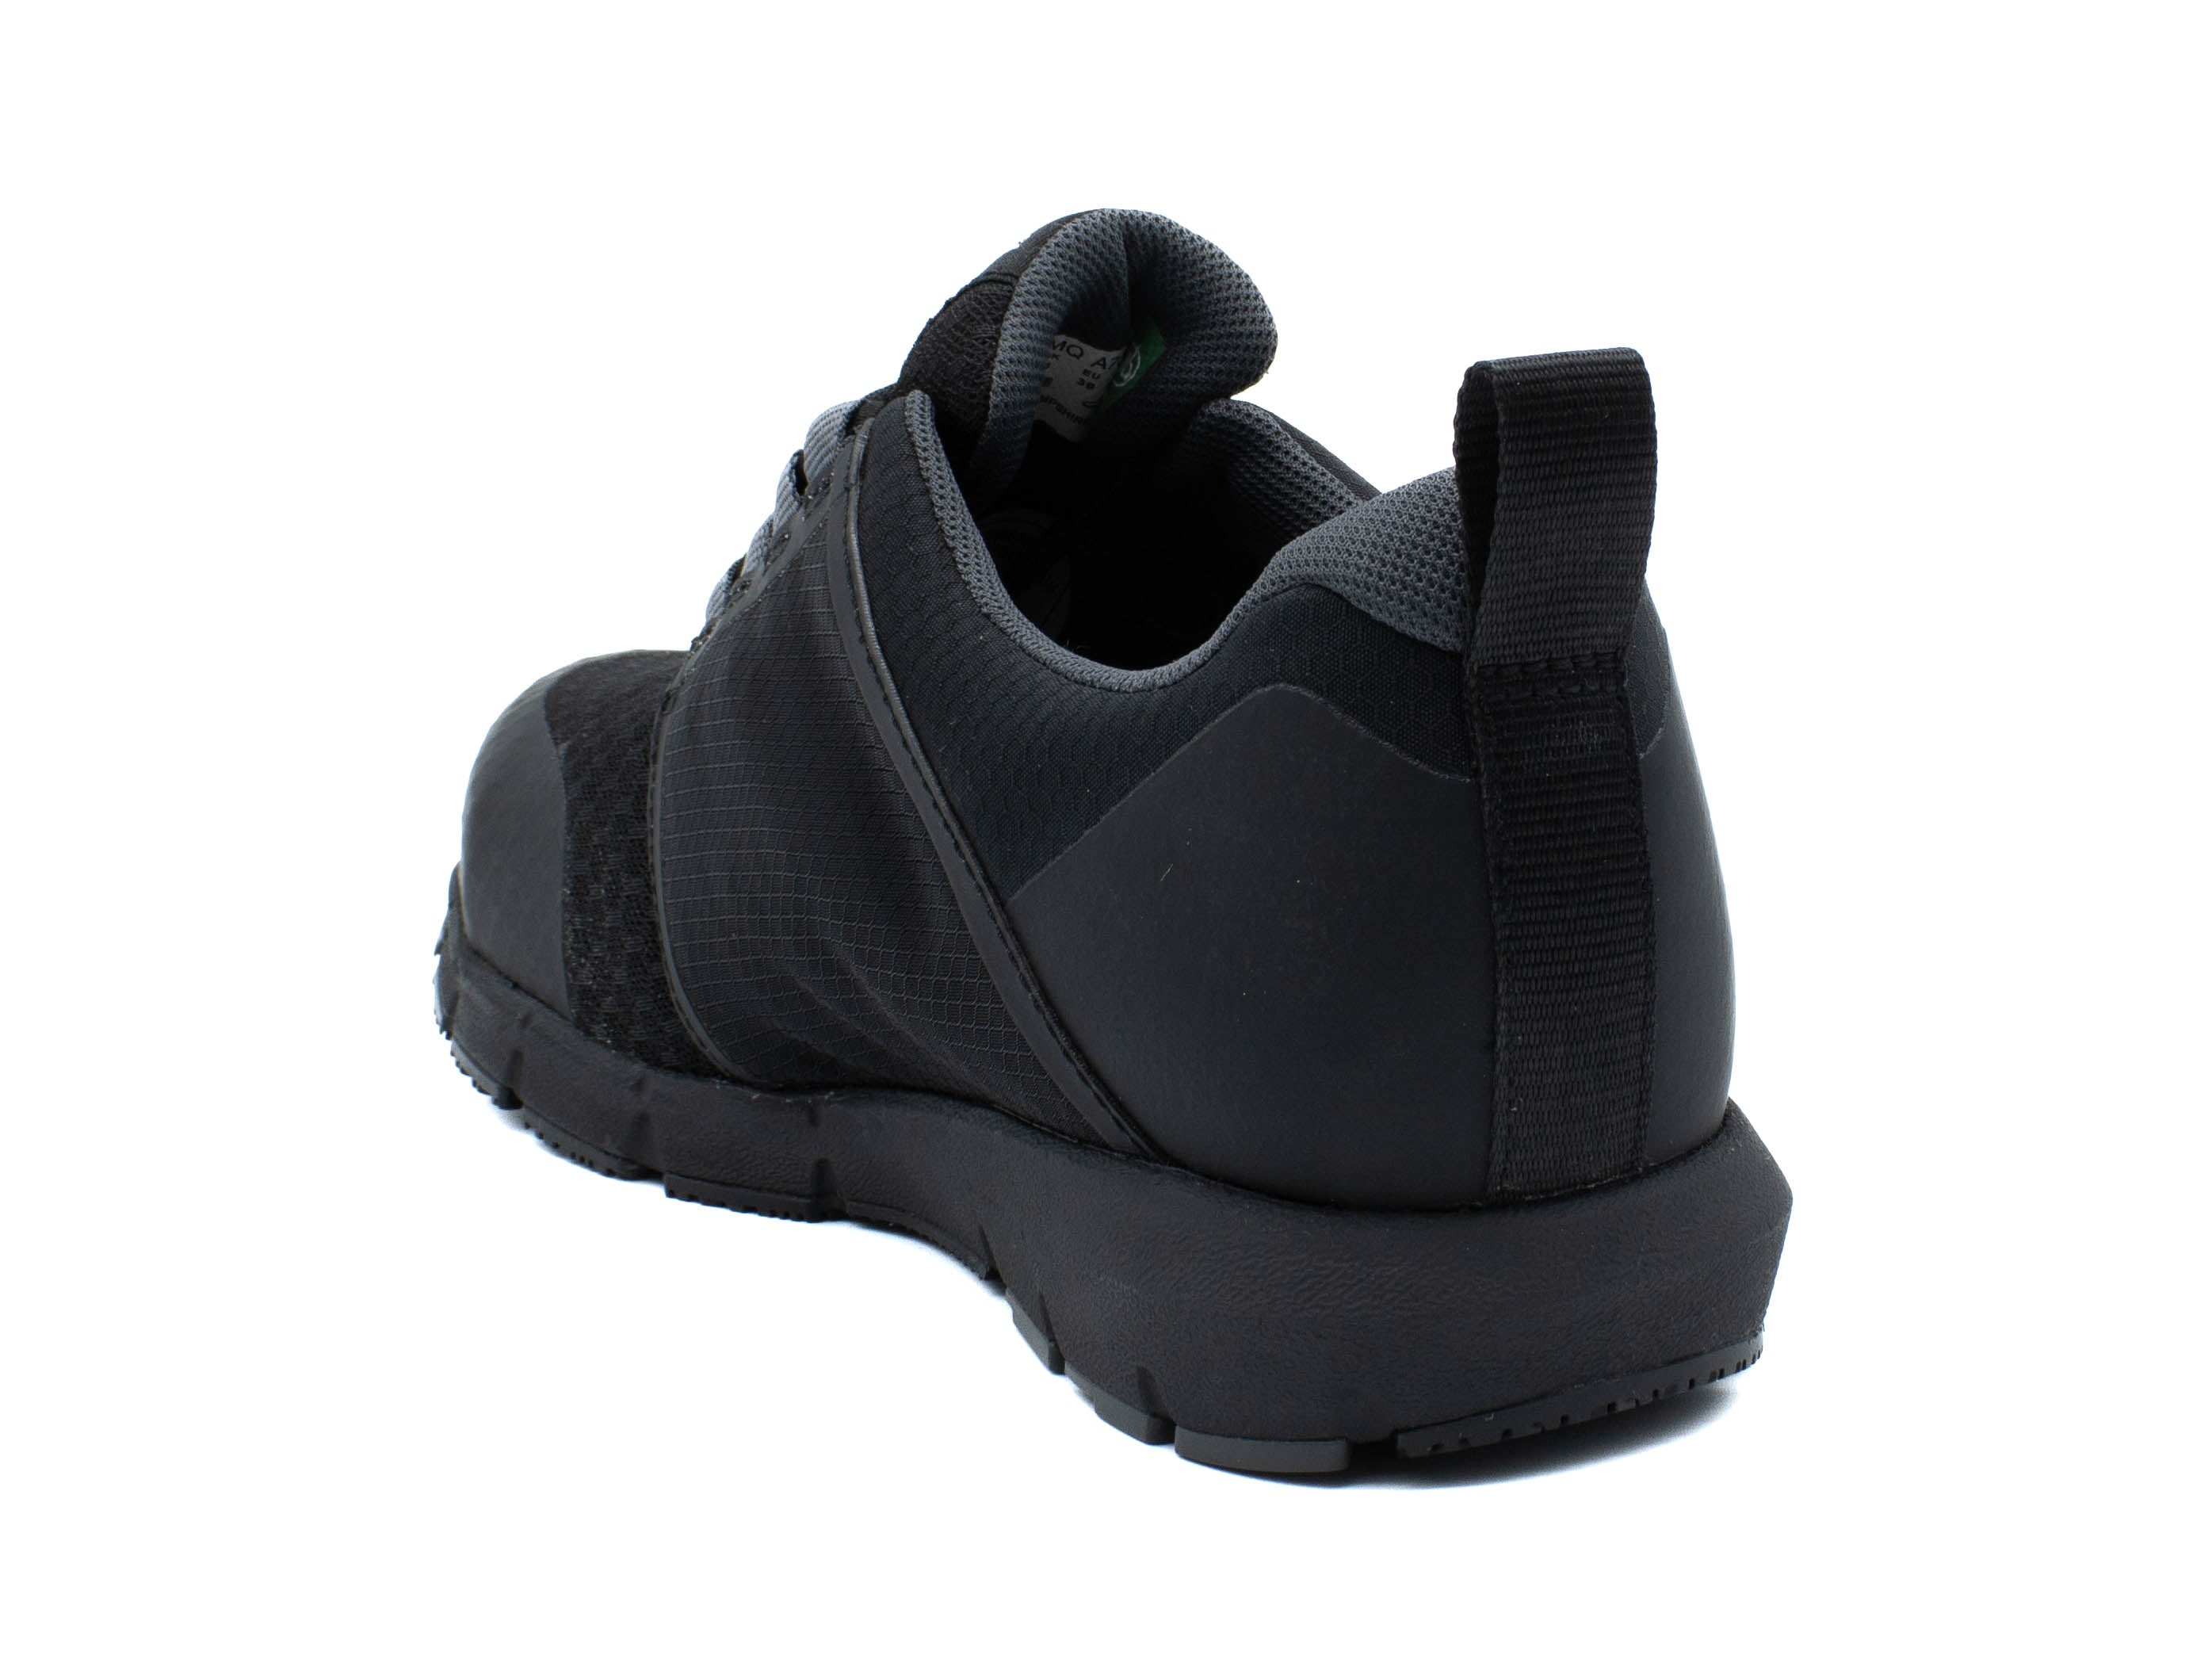 TIMBERLAND PRO SAFETY Radius Composite Toe Work Sneaker